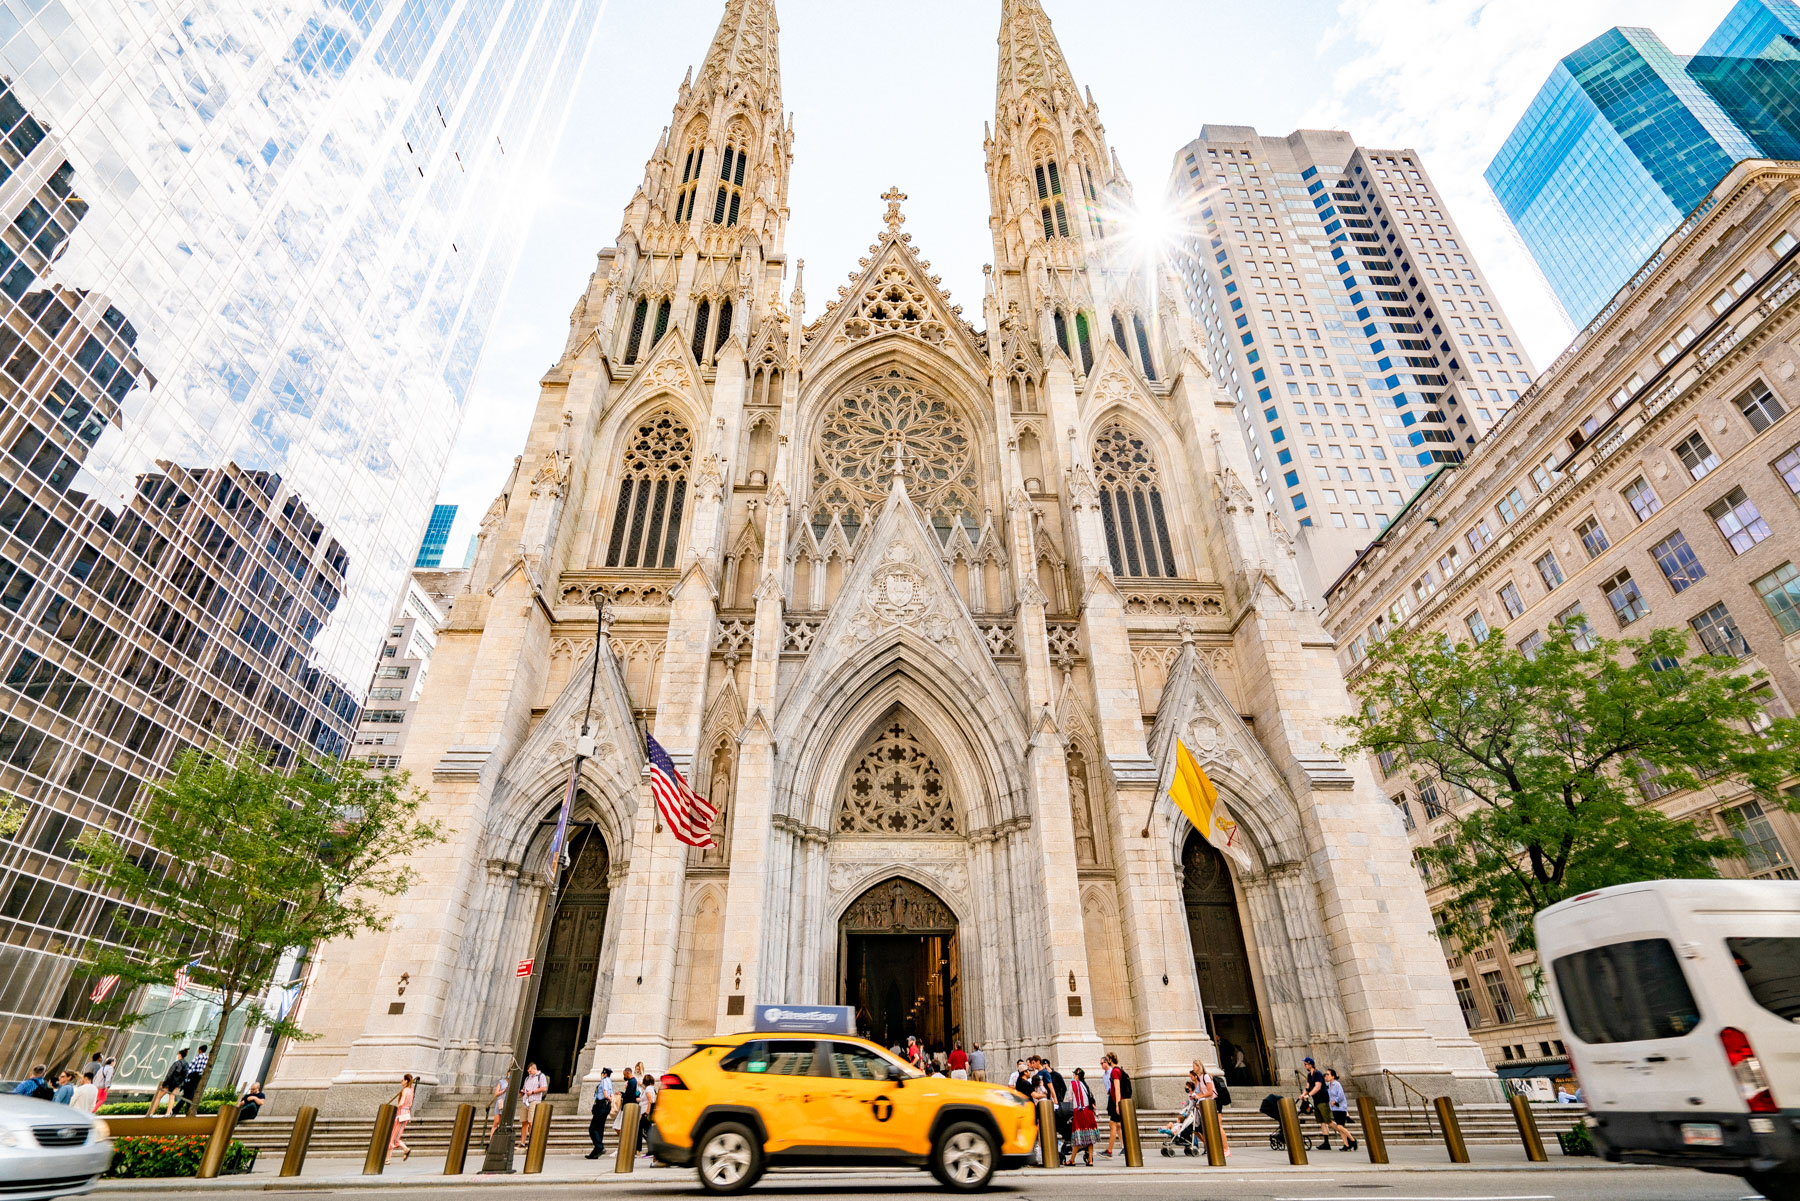 Most beautiful church in New York City
St. Patricks Church NYC